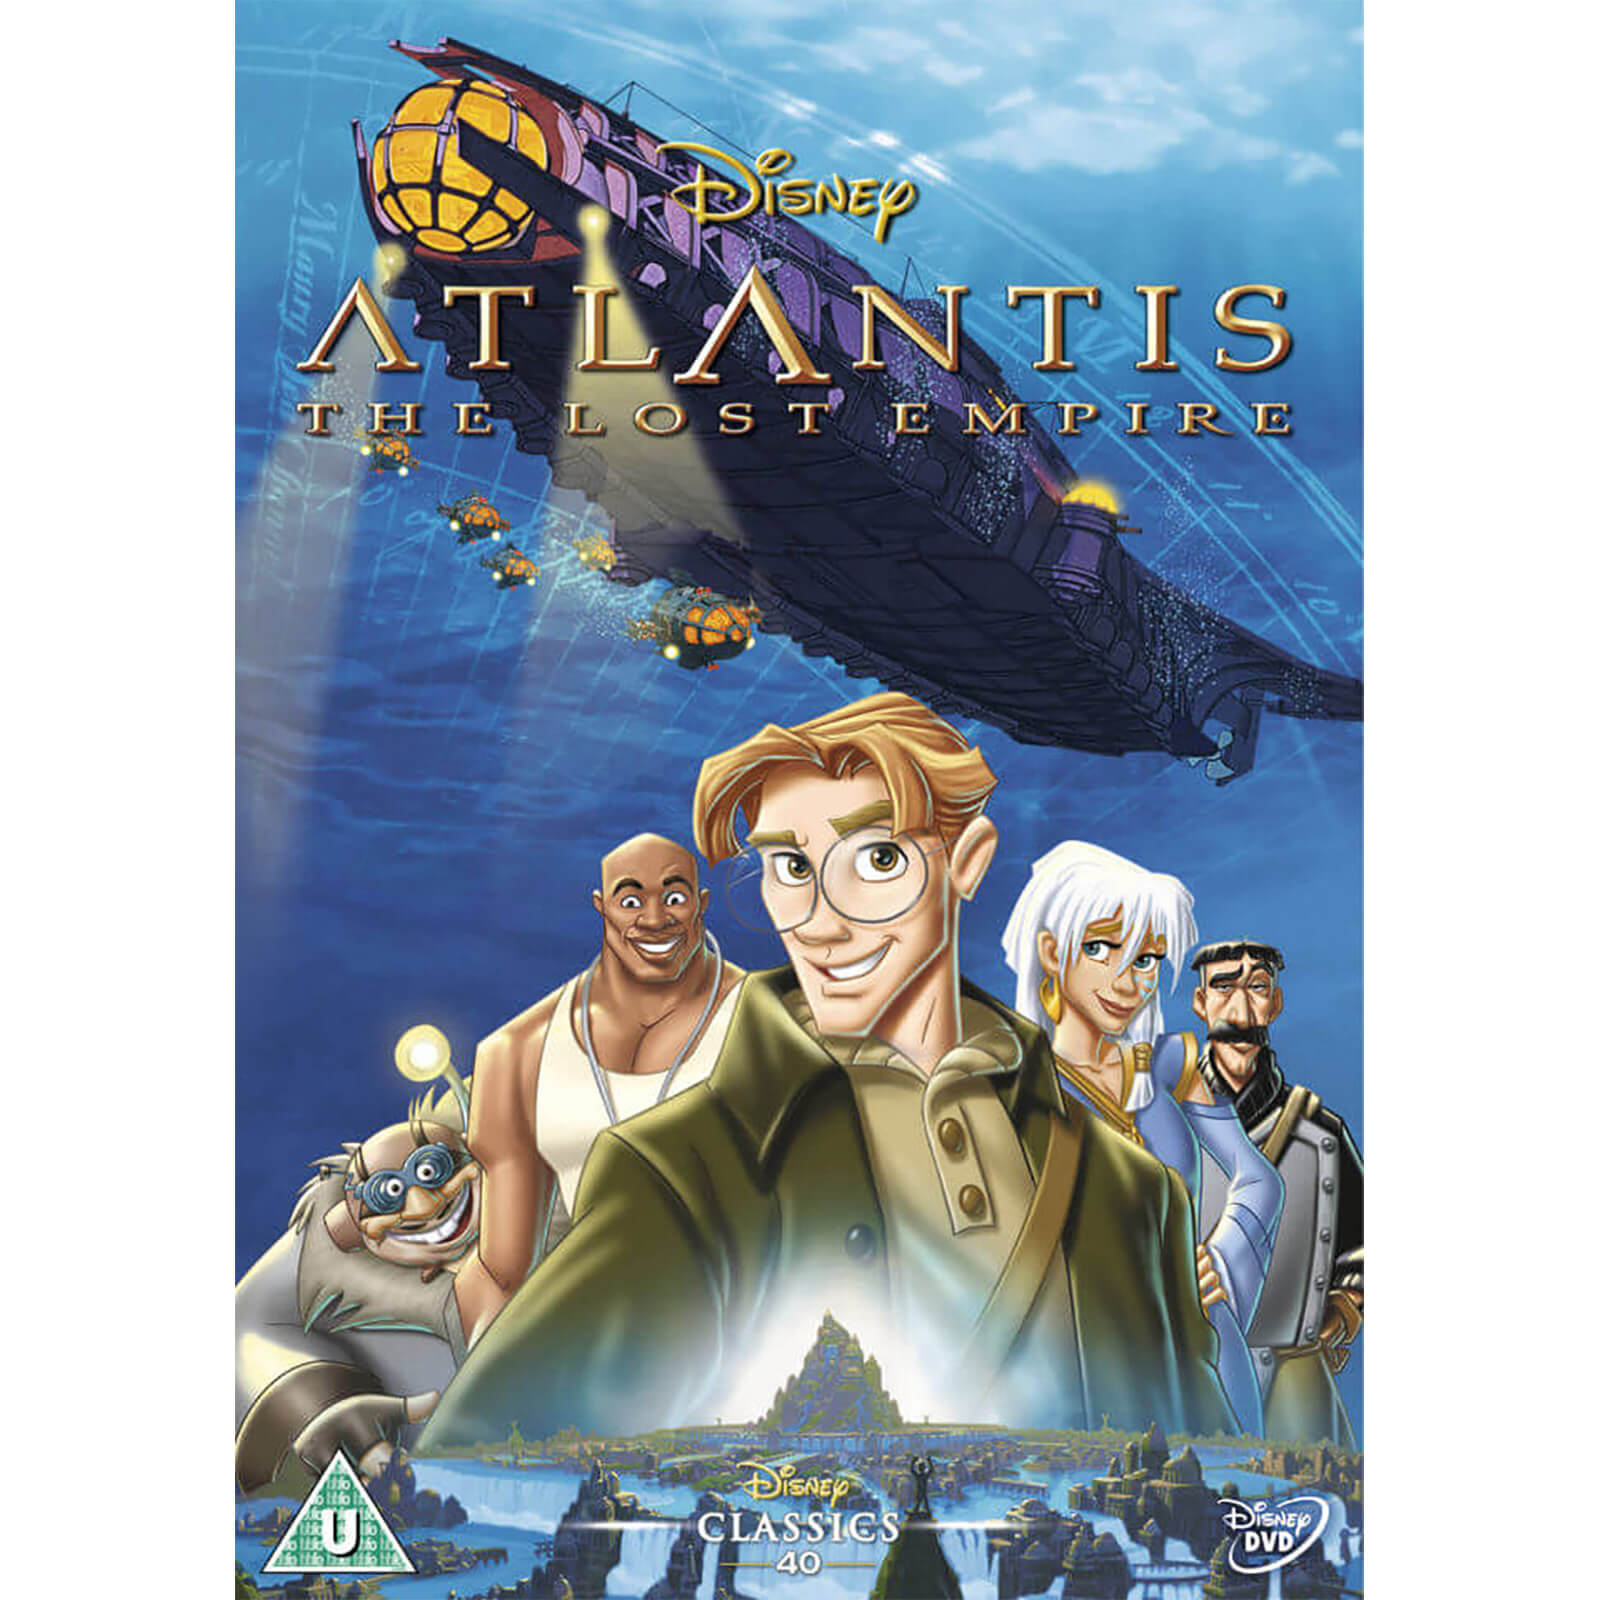 Atlantis 1. Атлантида: Затерянный мир (2001). Атлантида 2001.